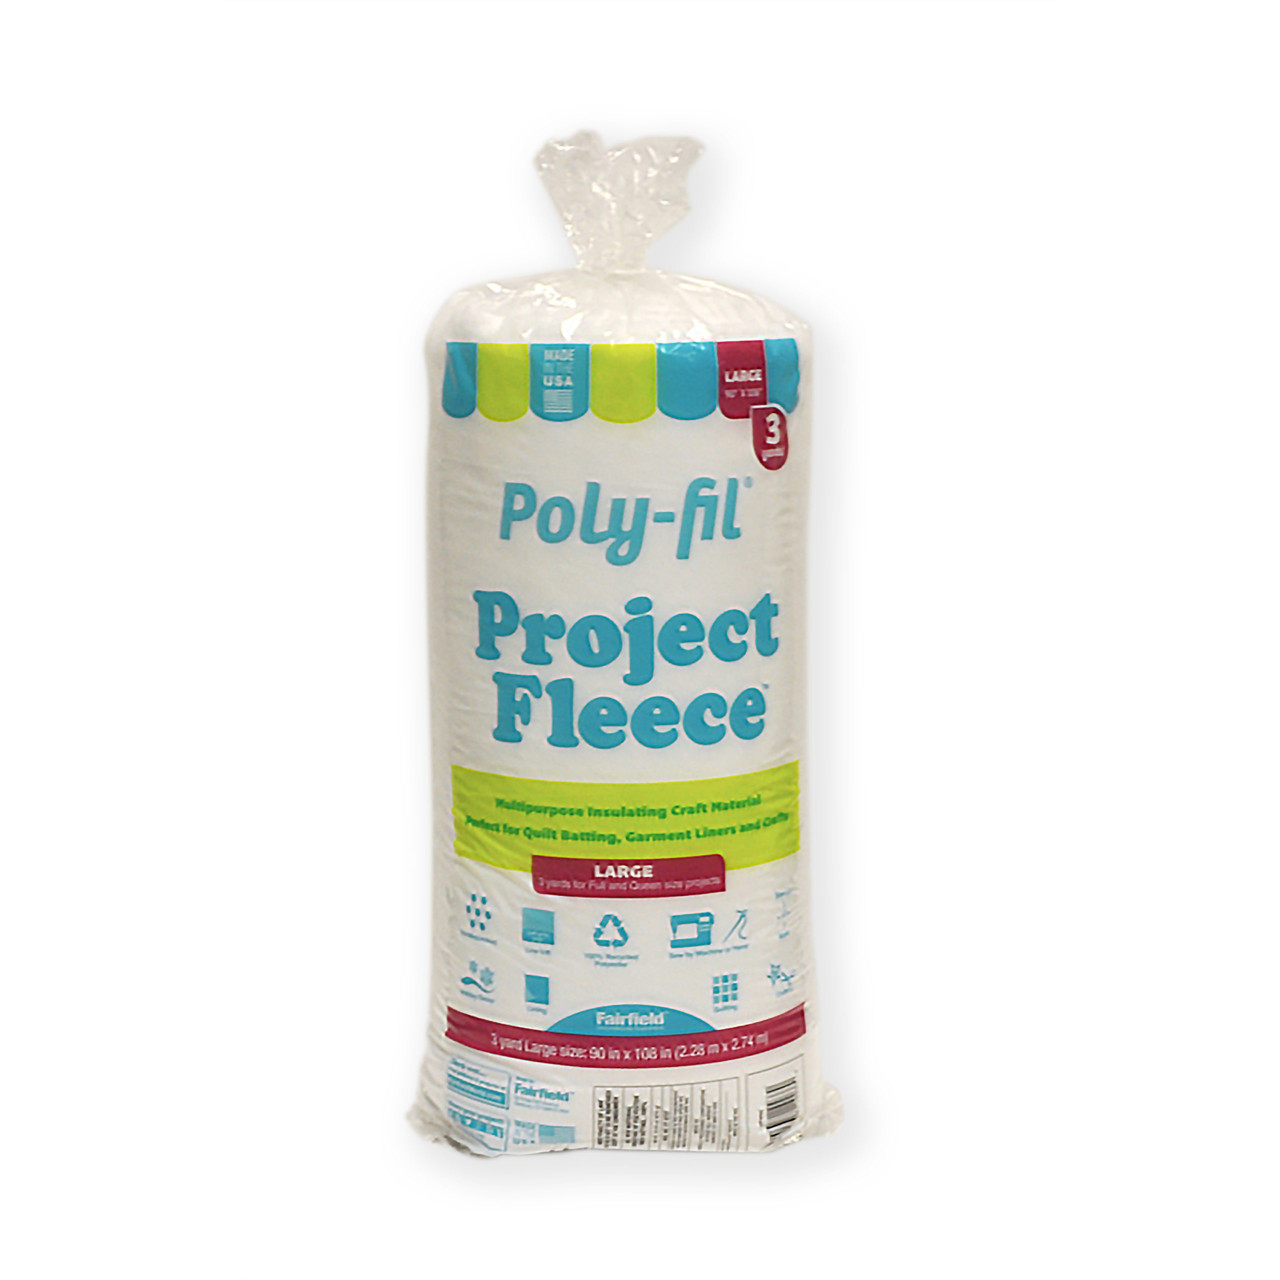 Poly Fill Project Fleece Craft Batting